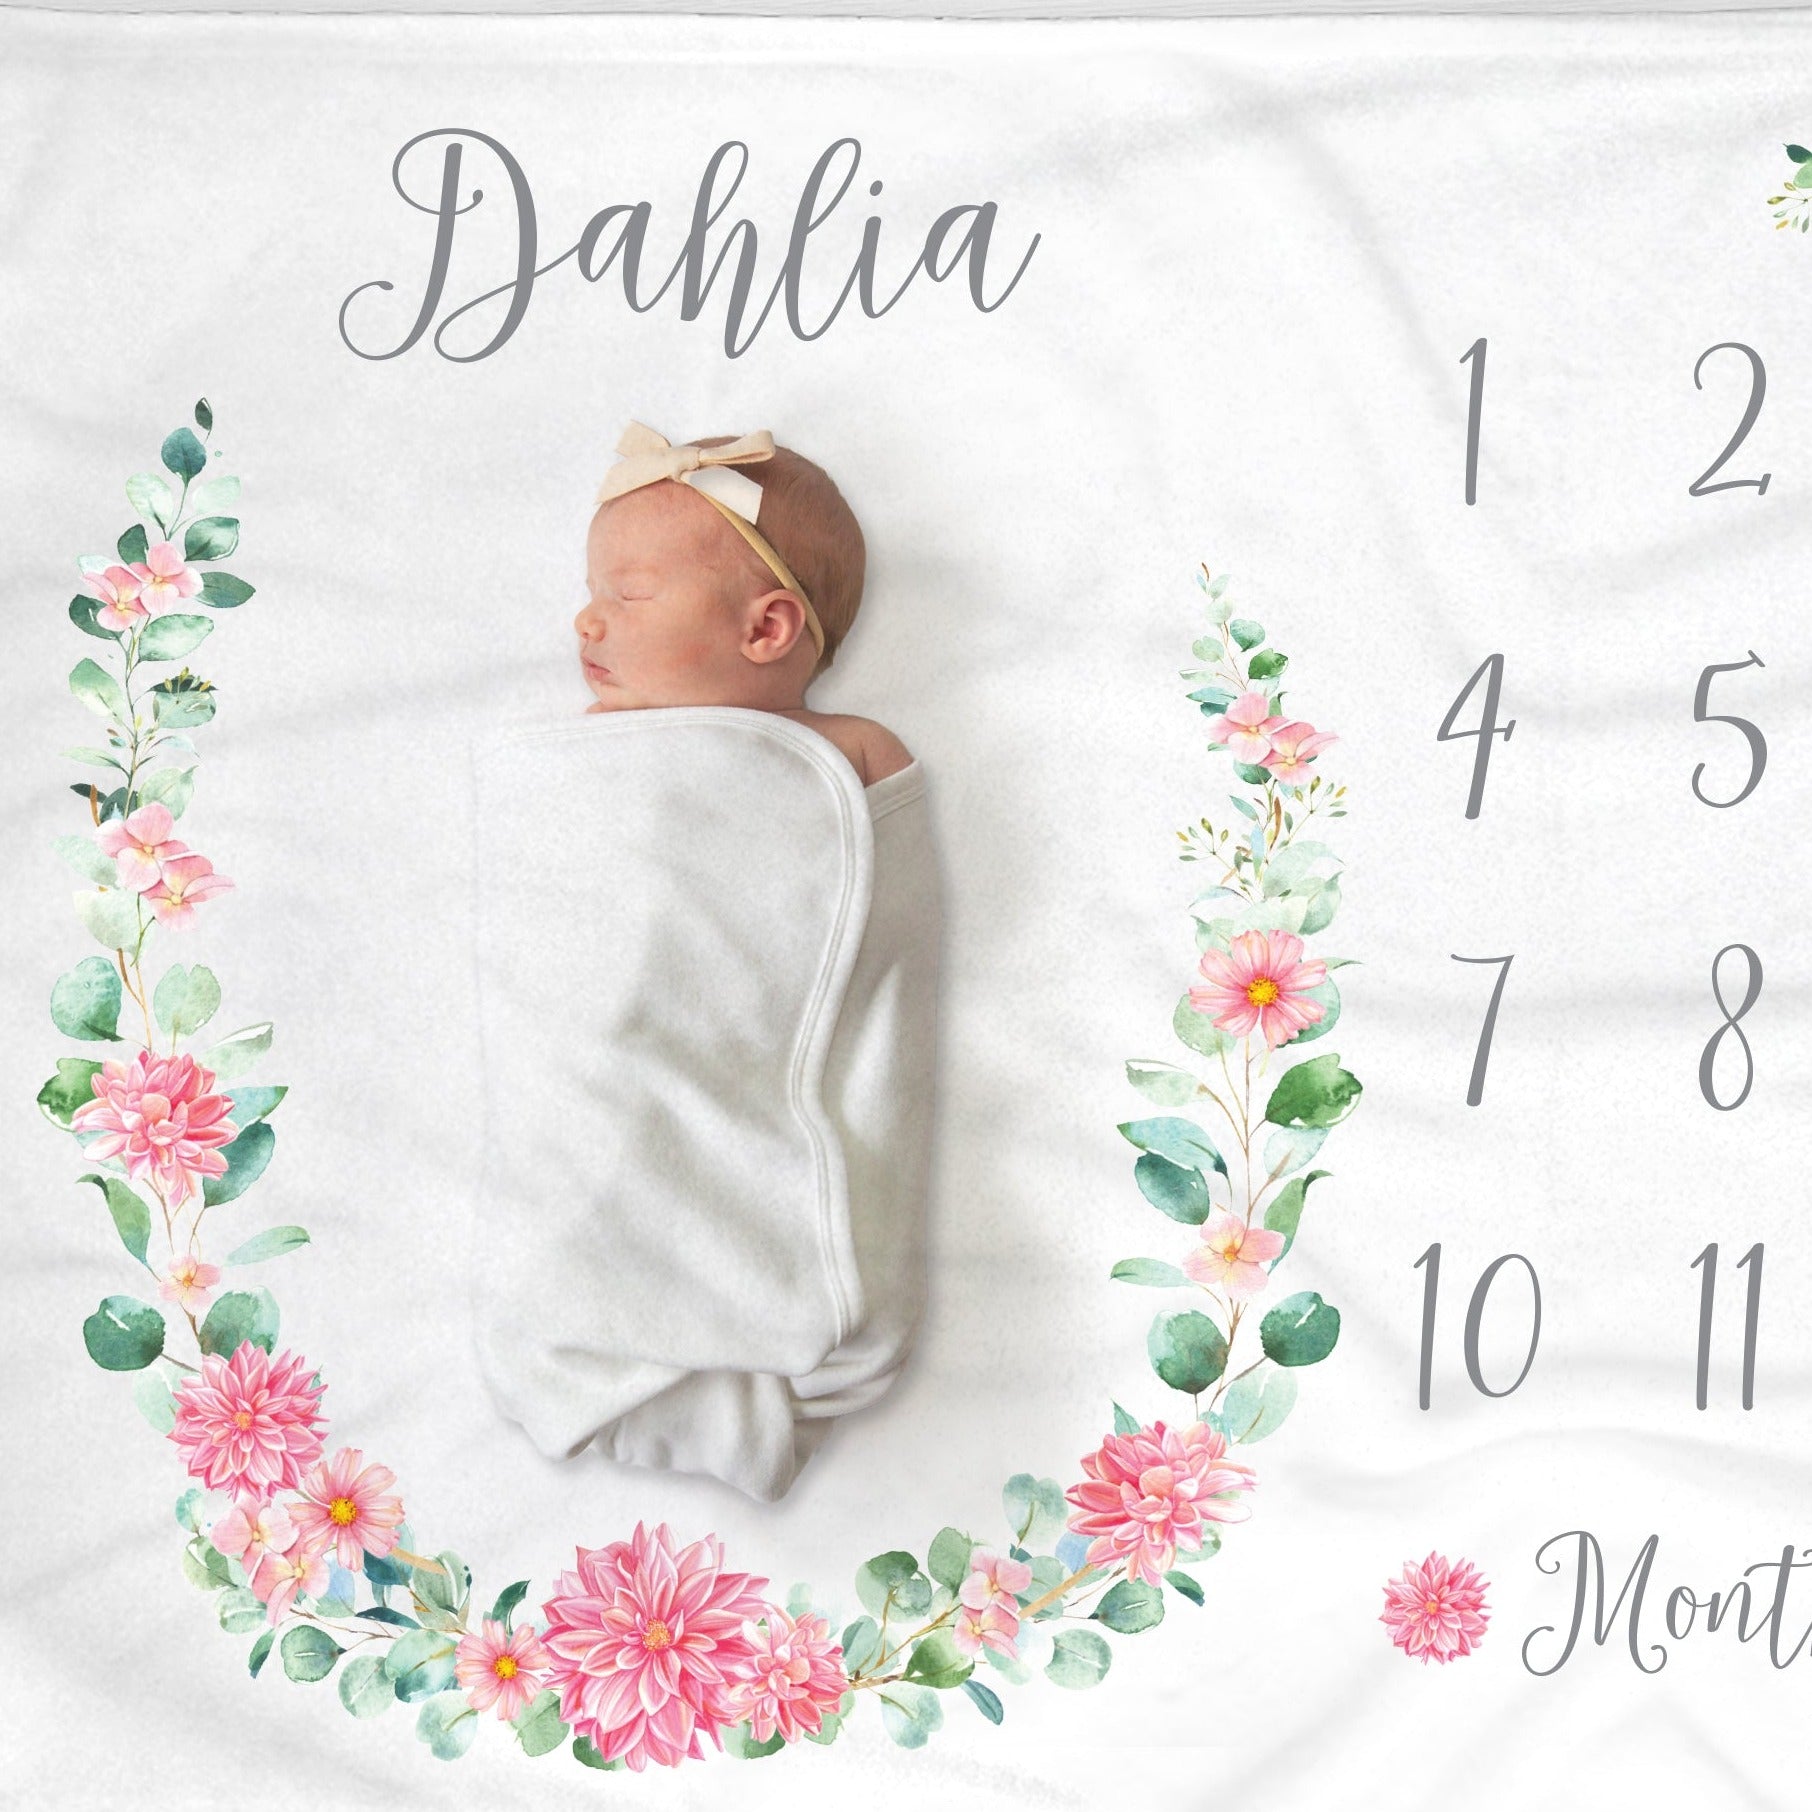 Dahlia Milestone baby blanket, track months, personalized